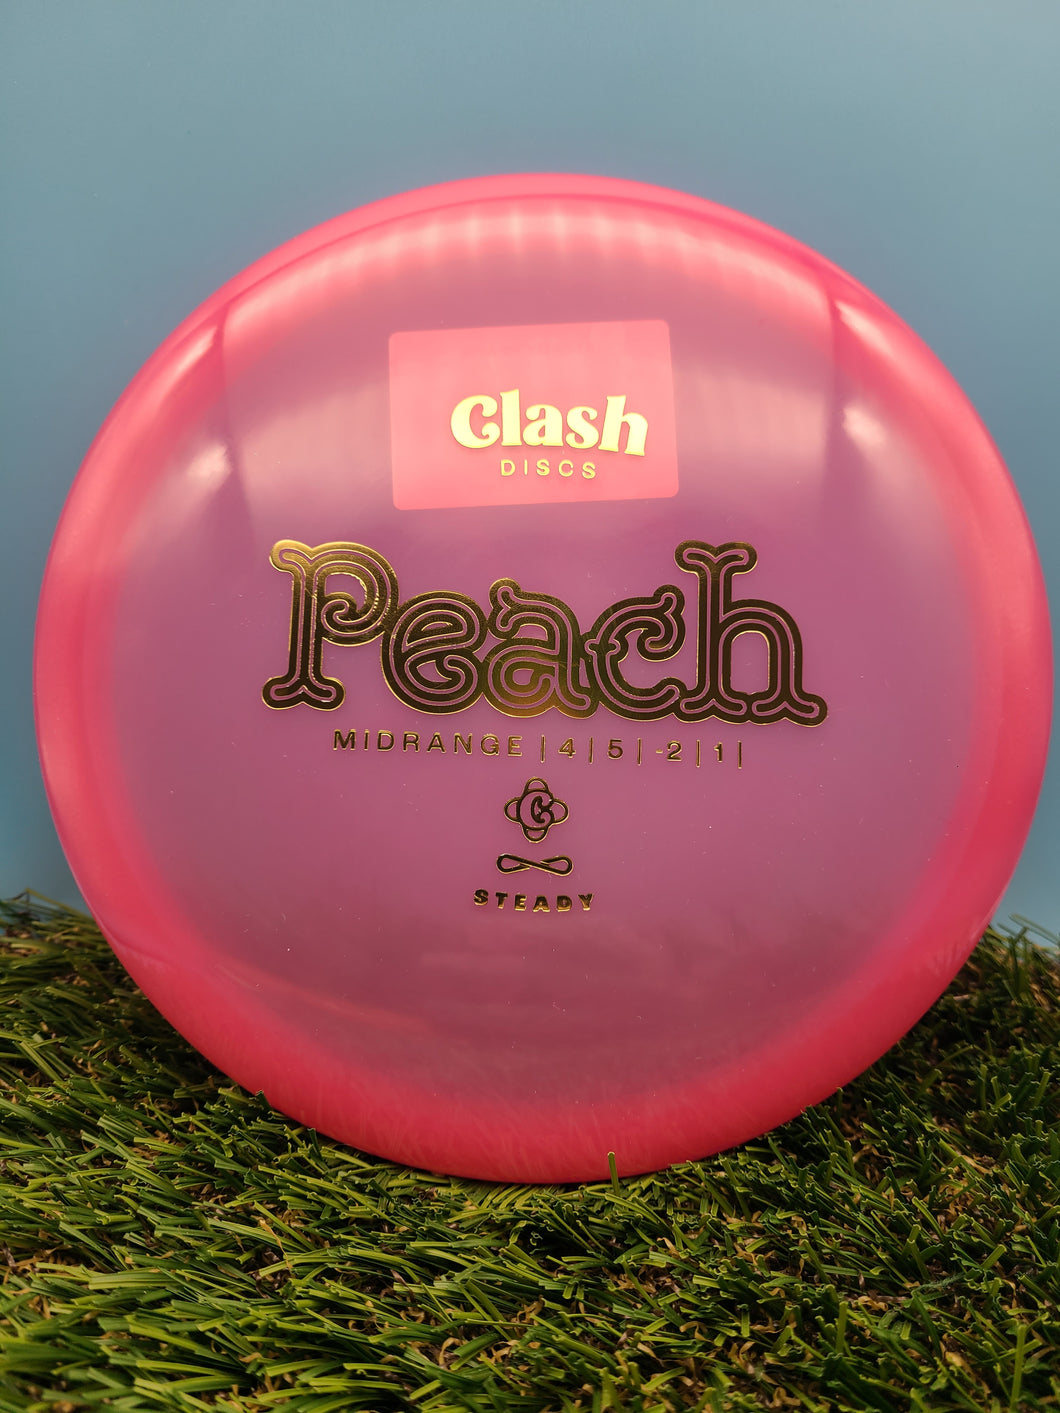 Clash Discs Steady Plastic Peach Midrange